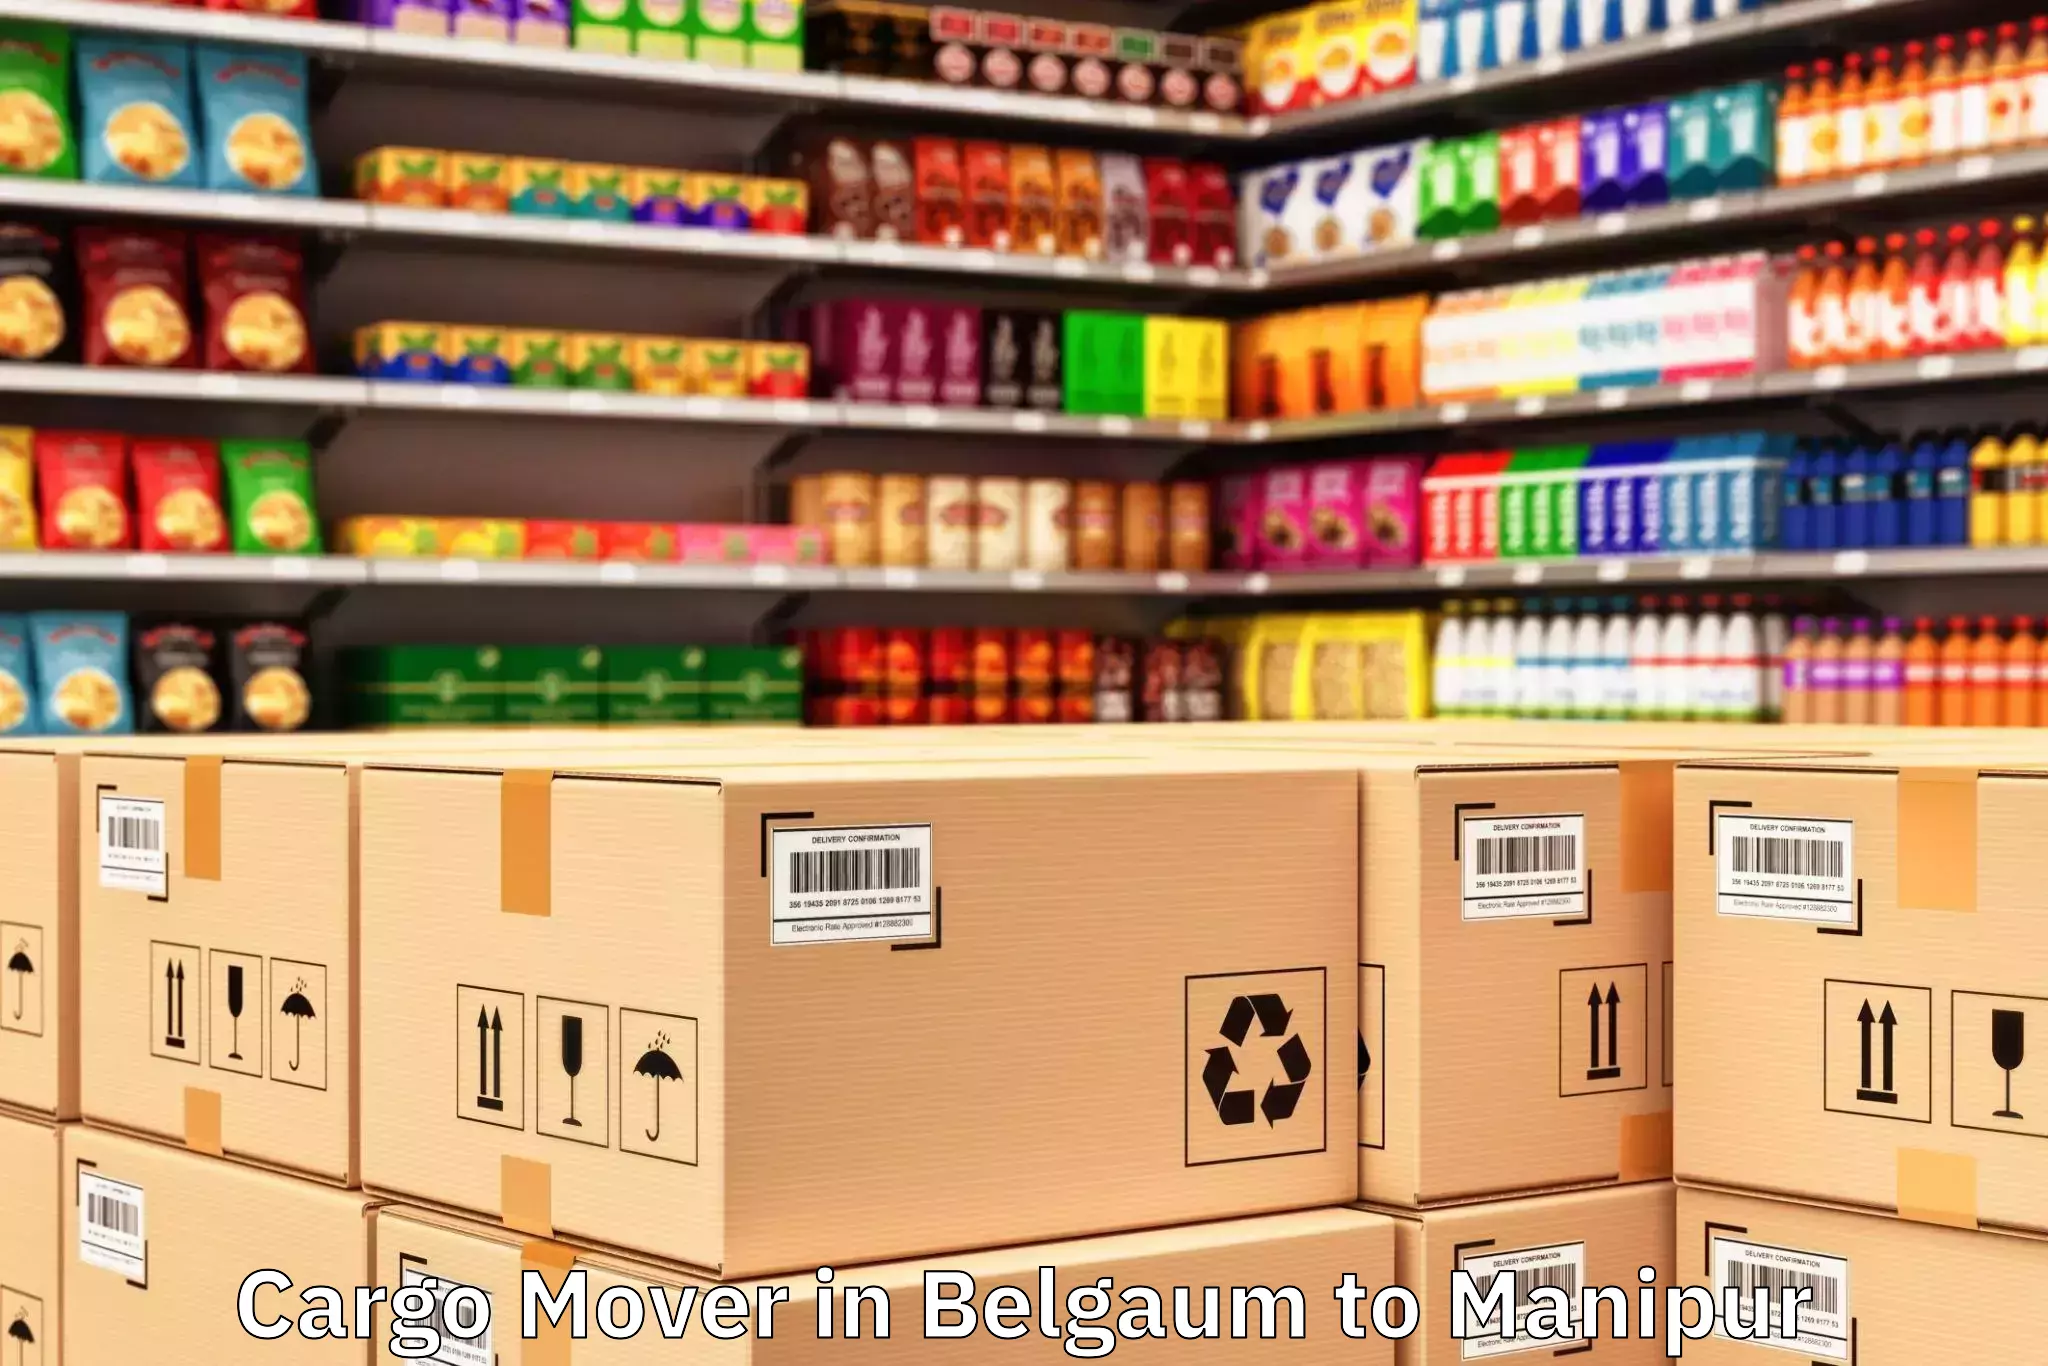 Hassle-Free Belgaum to Municipal Airport Imf Cargo Mover